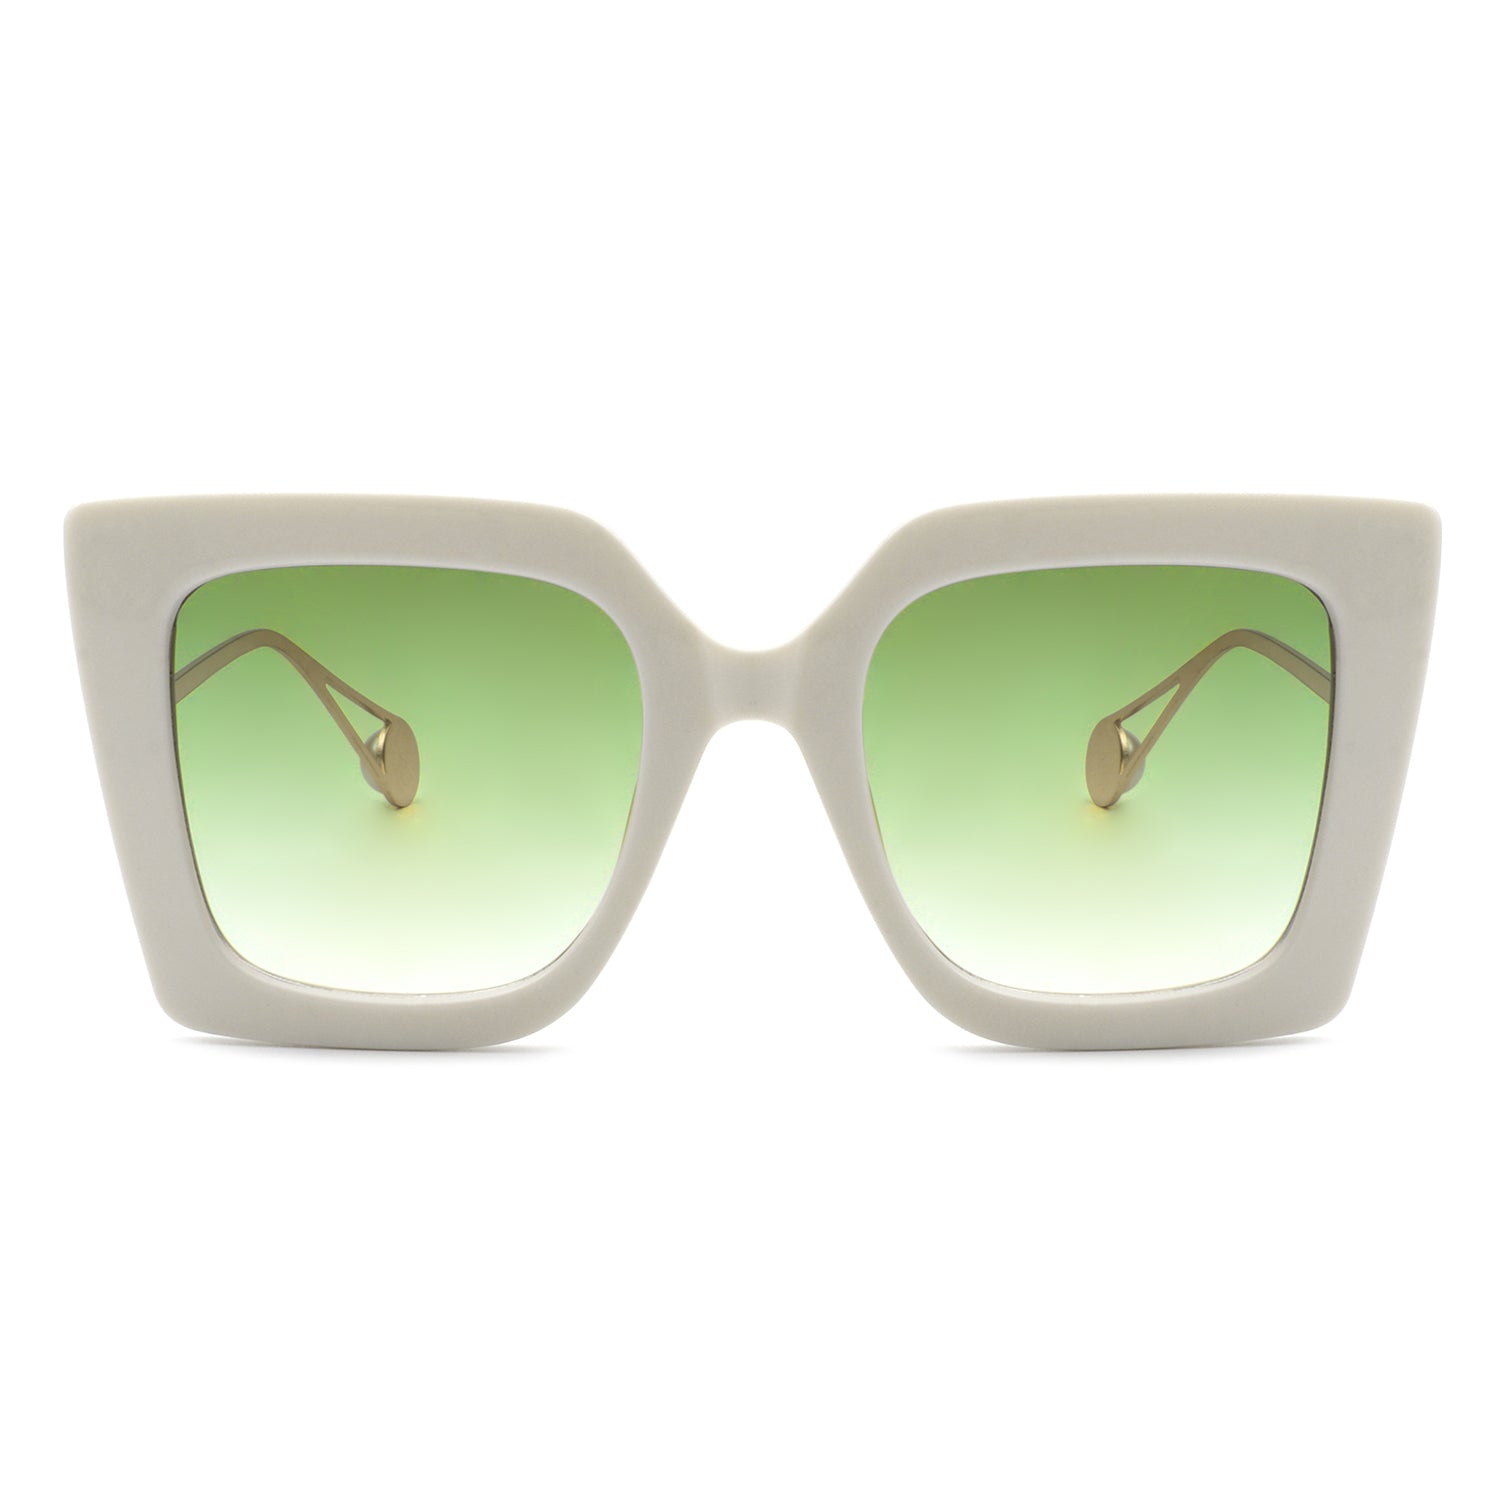 White oversized cat eye sunglasses